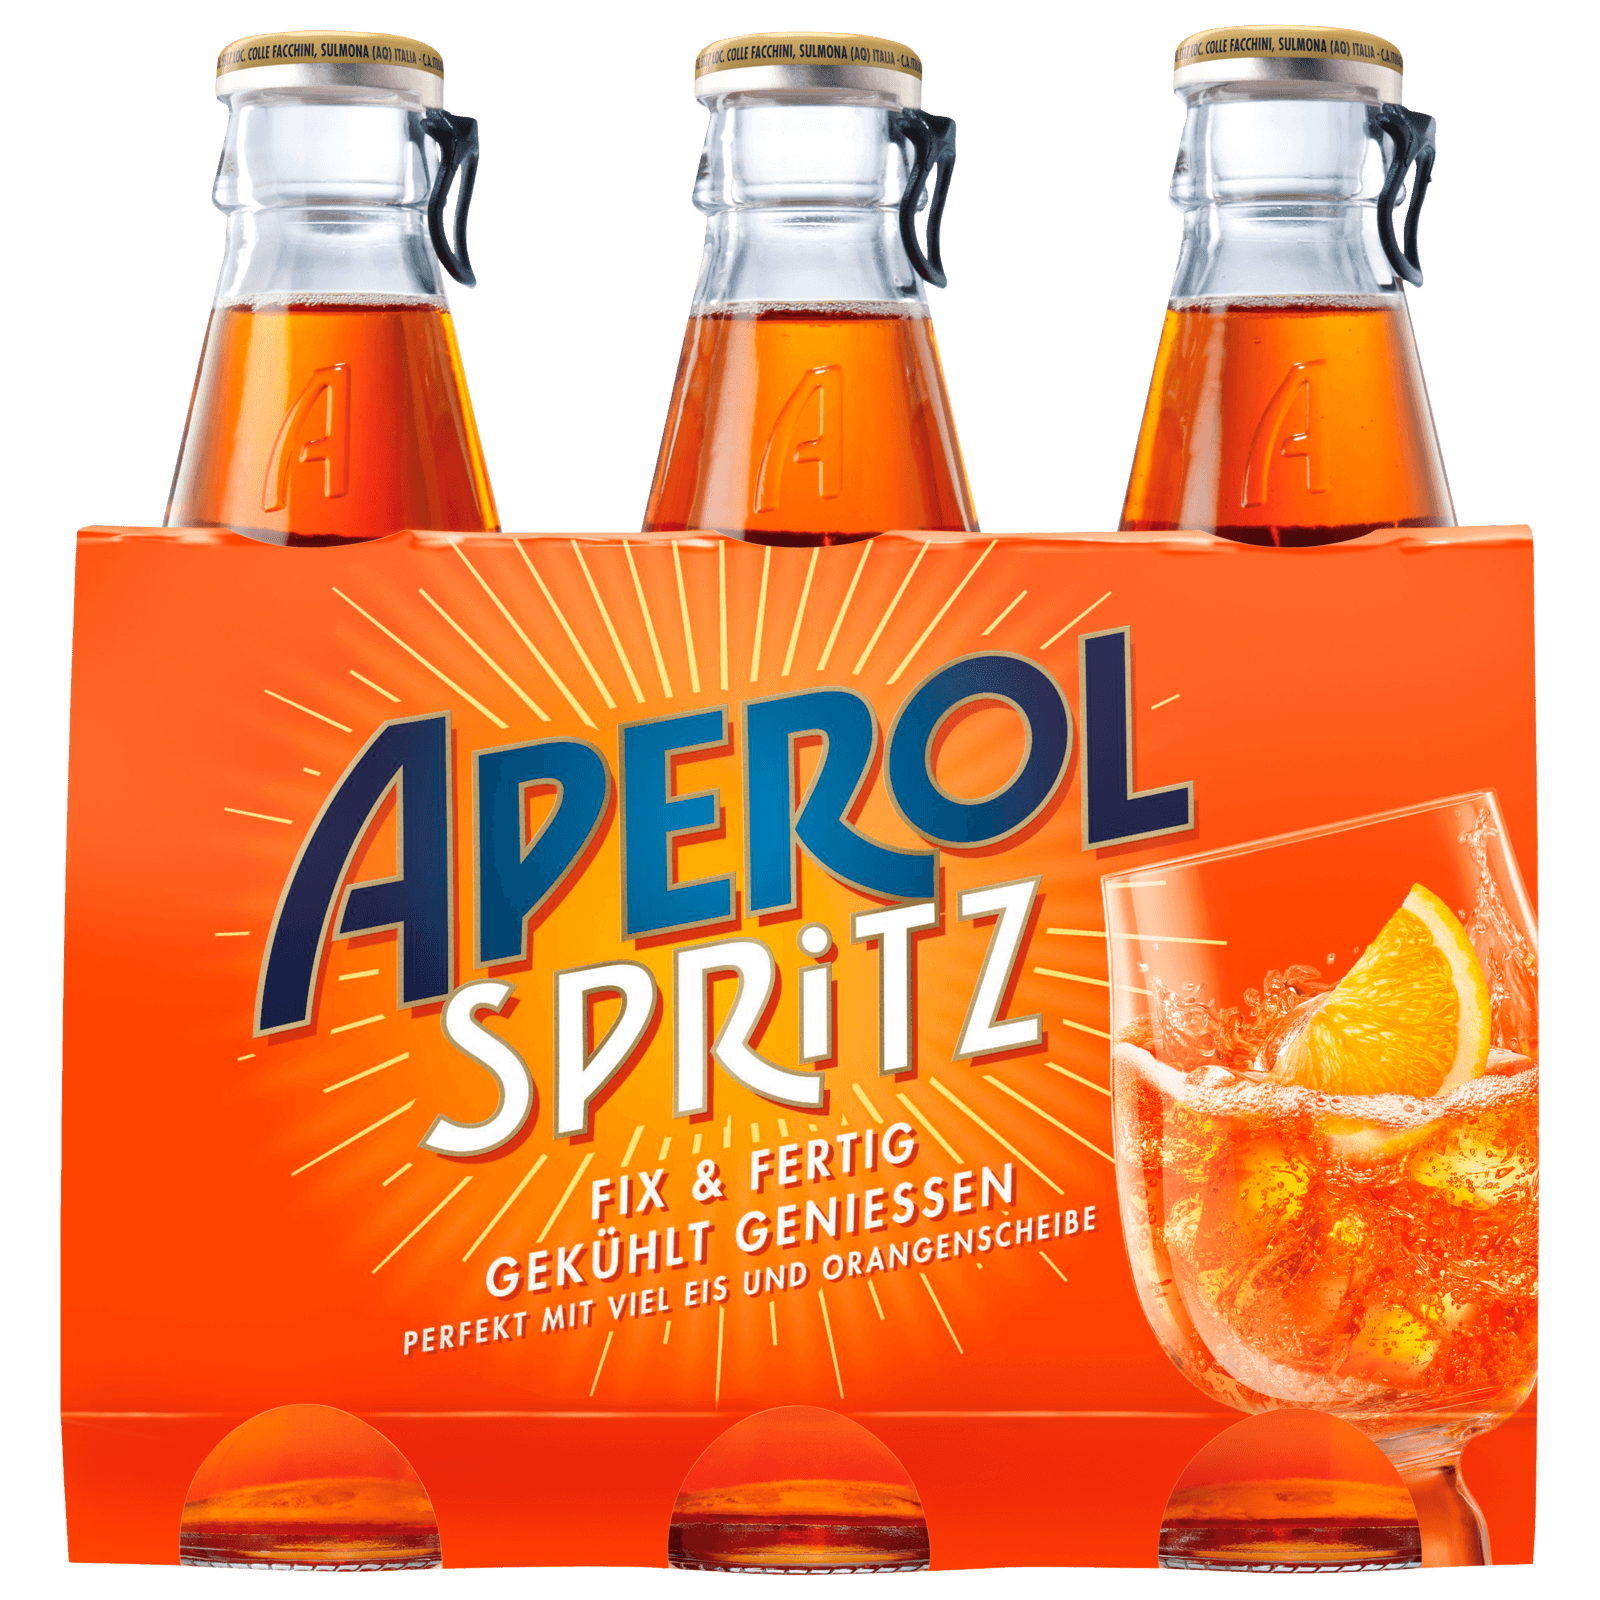 Aperol Spritz Perfekt gemixt 3x175ml bei REWE online bestellen!